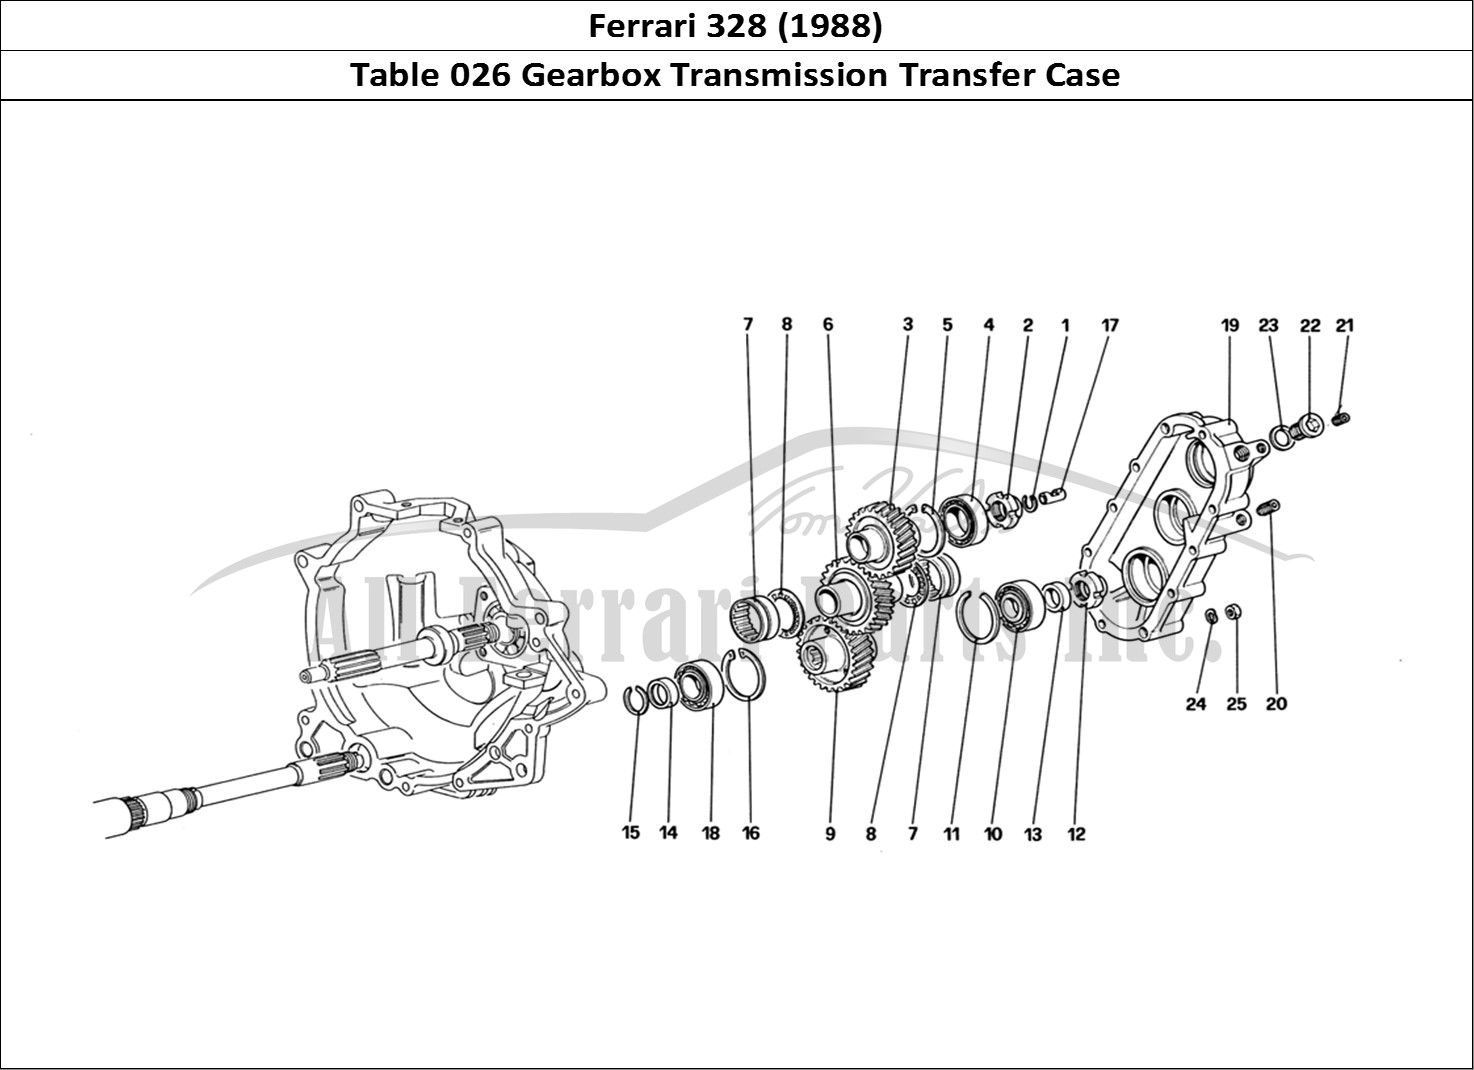 Ferrari Parts Ferrari 328 (1988) Page 026 Gearbox Transmission